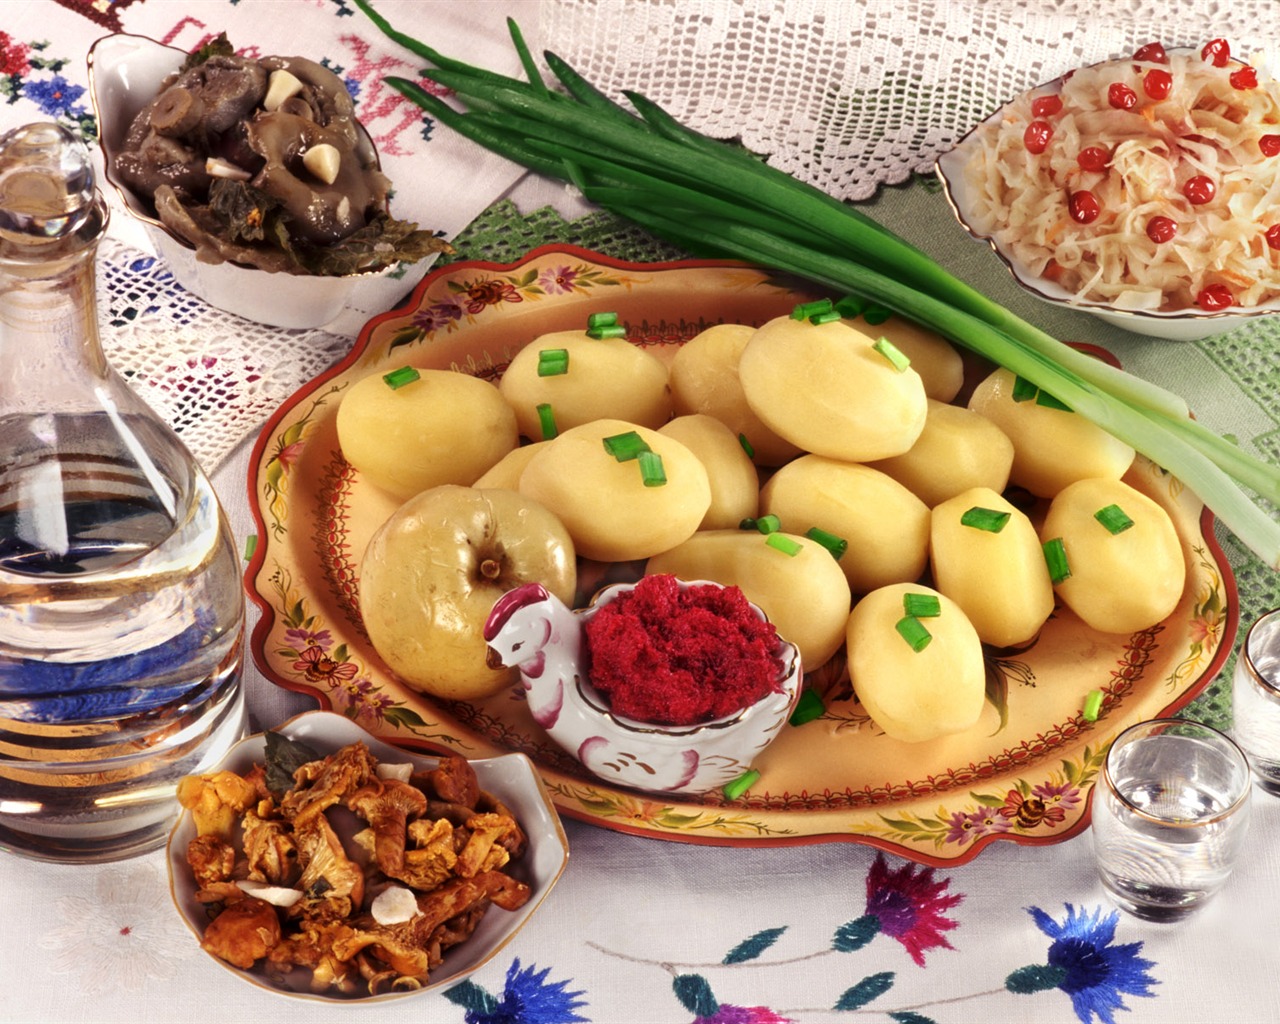 Russian type diet meal wallpaper (1) #2 - 1280x1024